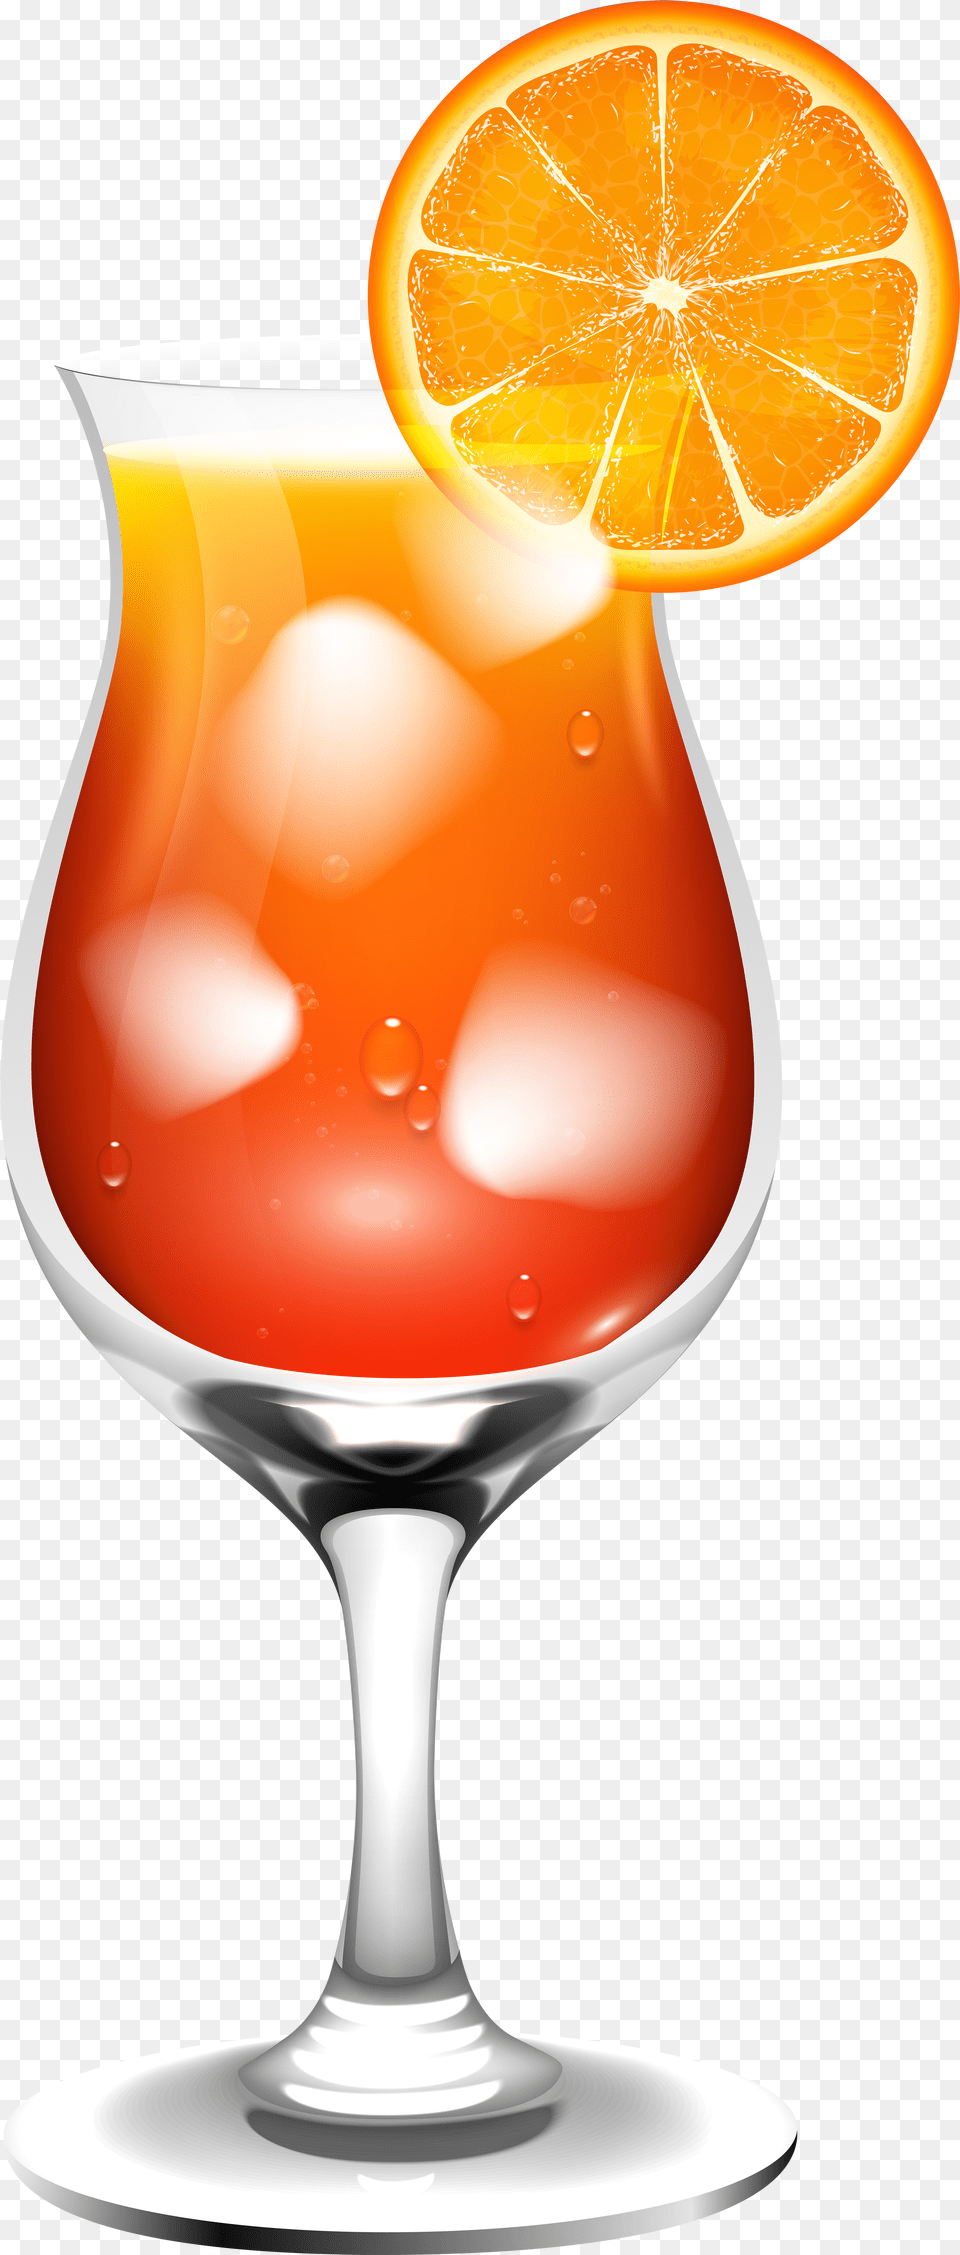 Cocktail Images Transparent Background Drinks Clip Art Free Png Download